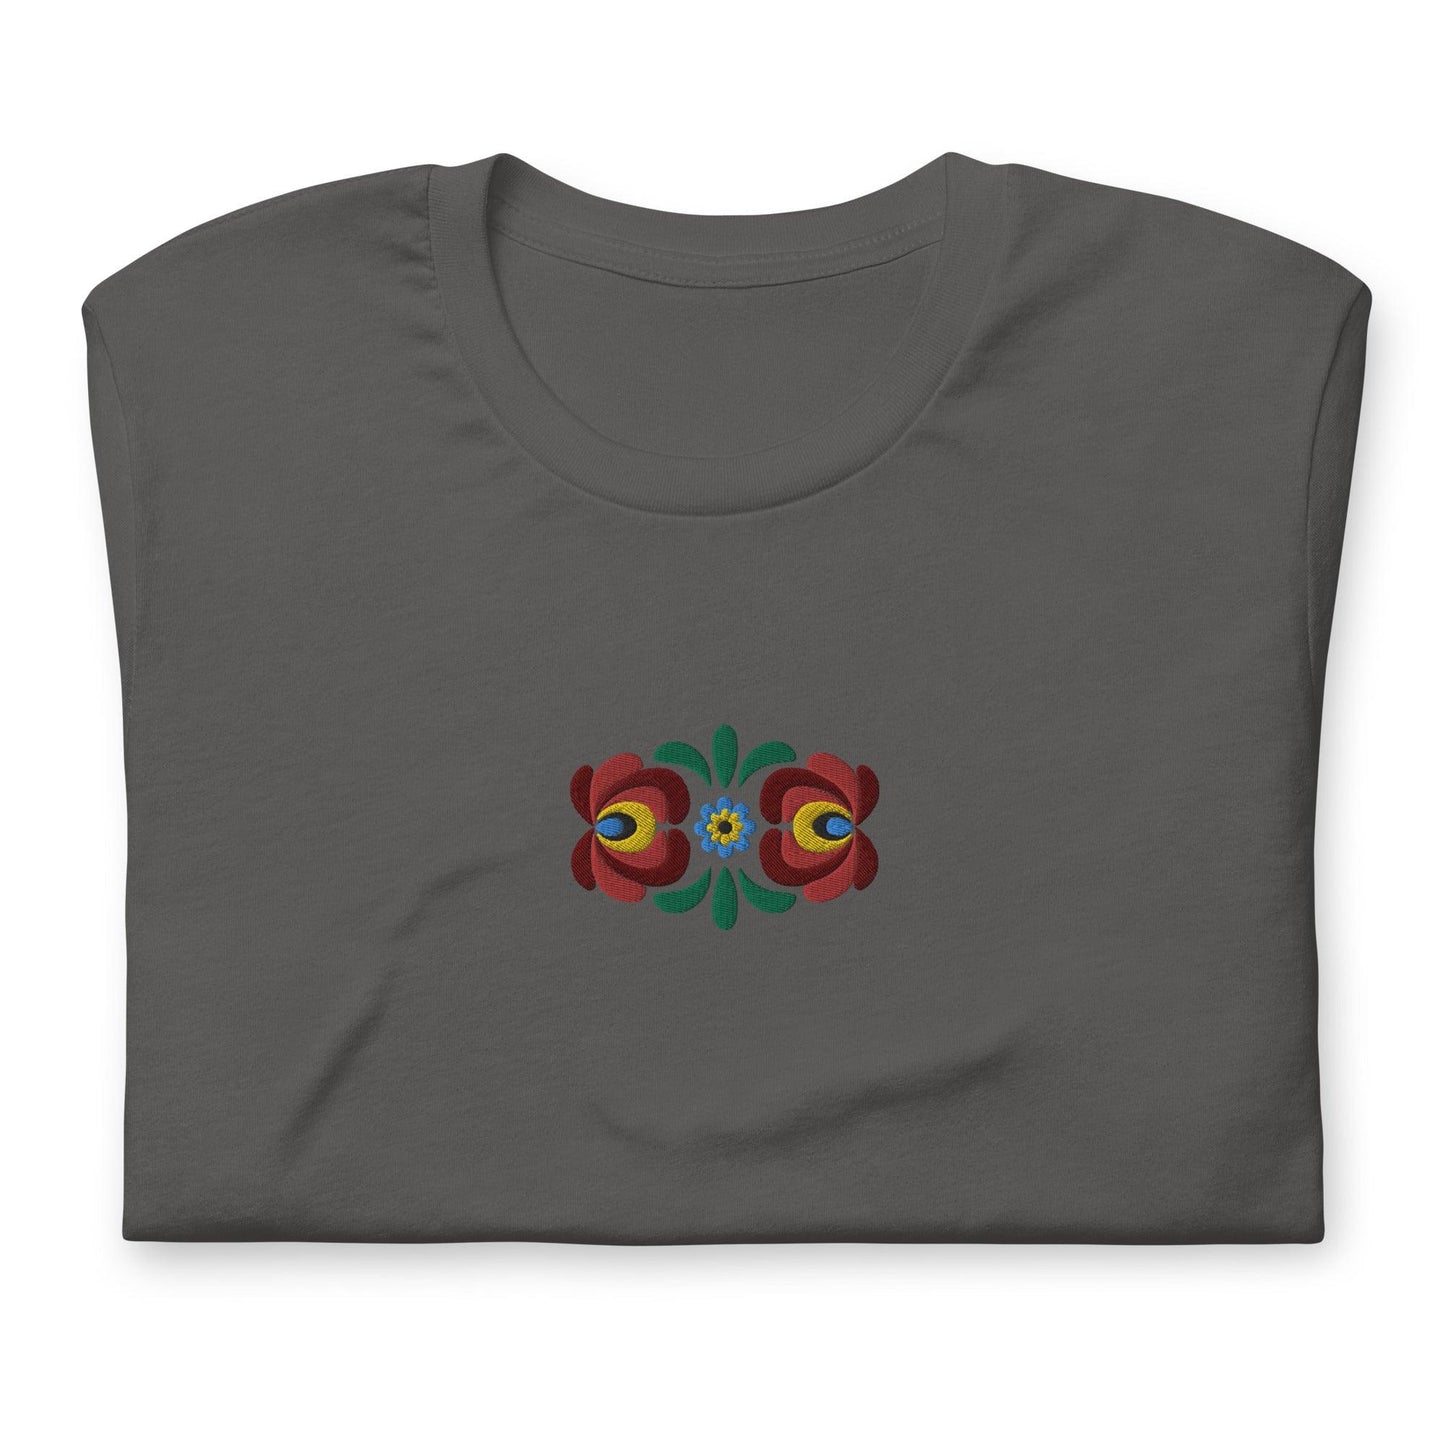 Hungarian Matyó Embroidered T-Shirt - The Global Wanderer